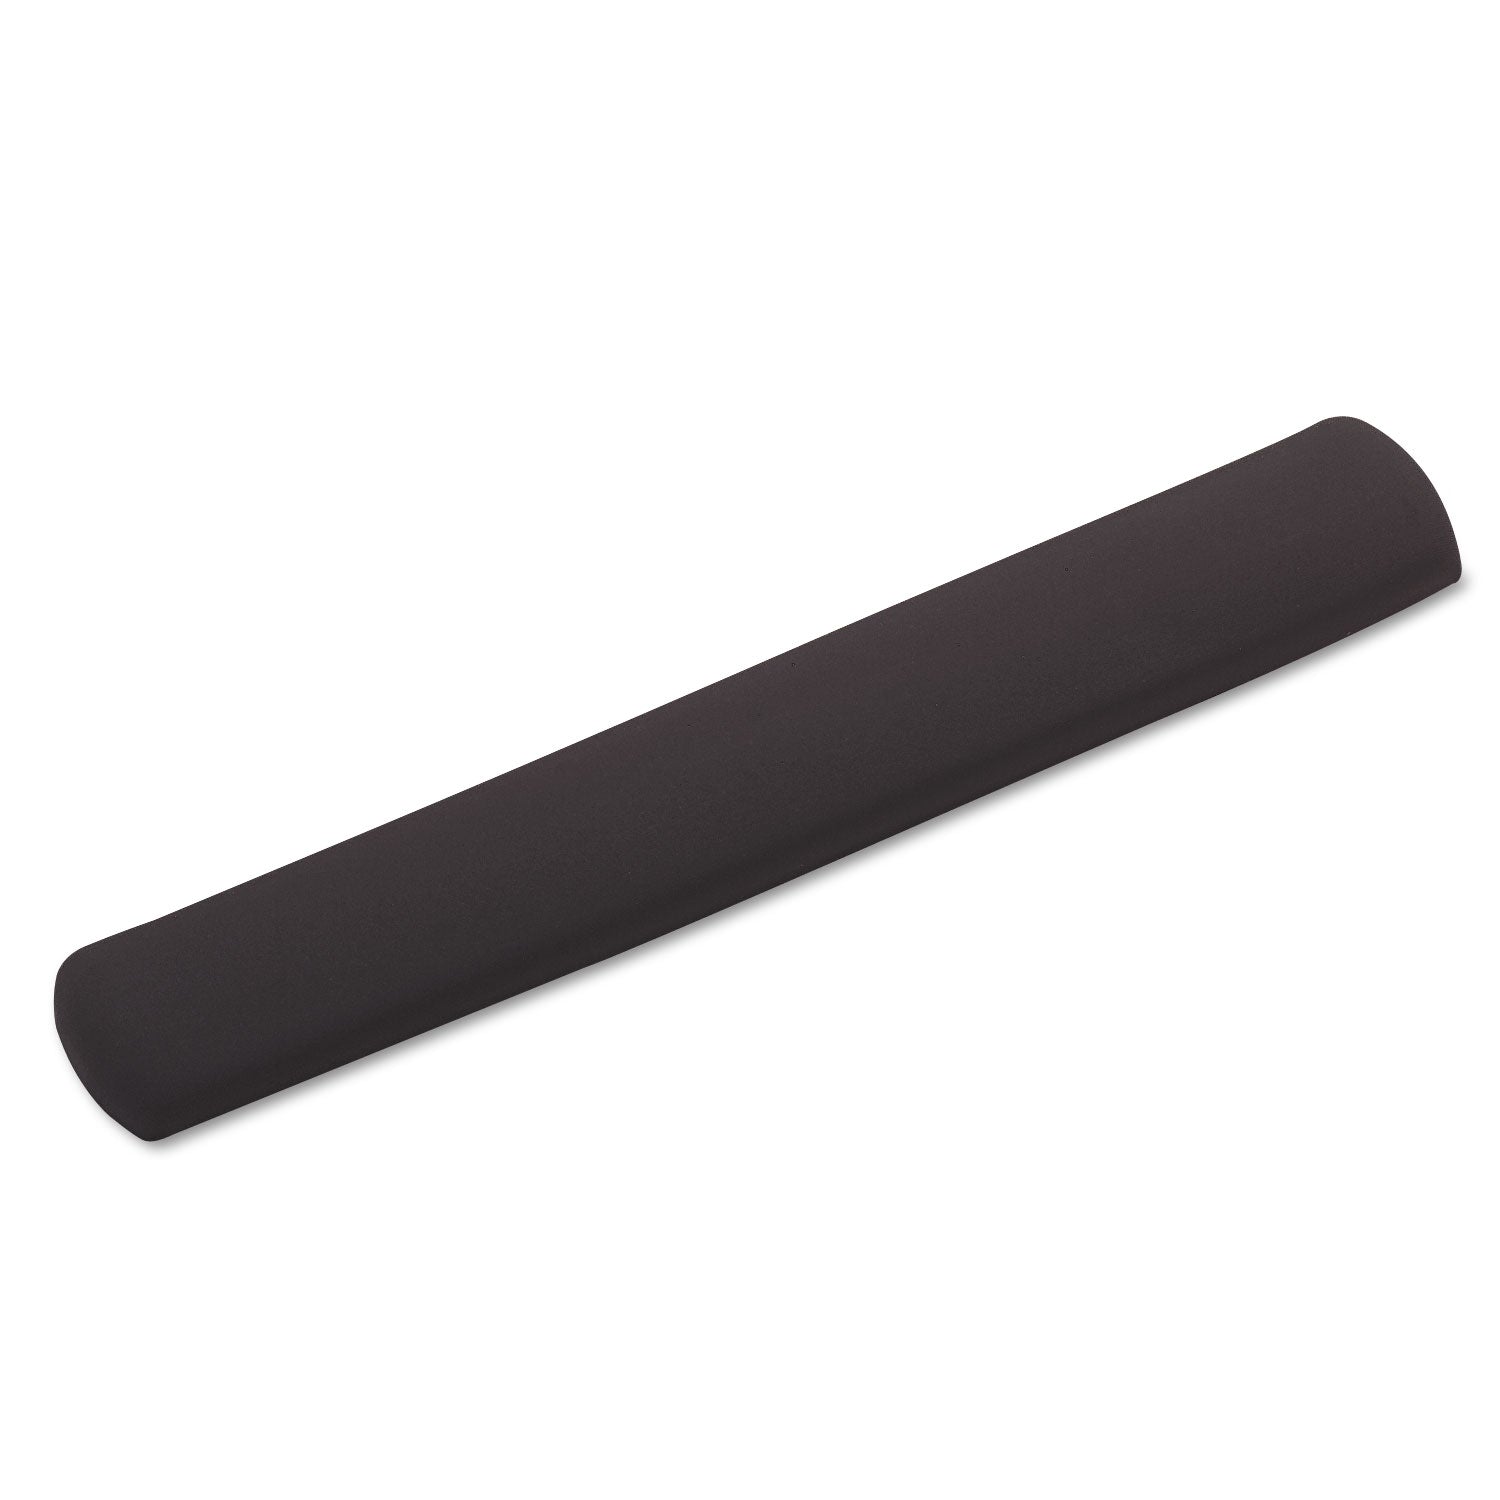 Fabric-Covered Gel Keyboard Wrist Rest, 19 x 2.87, Black - 